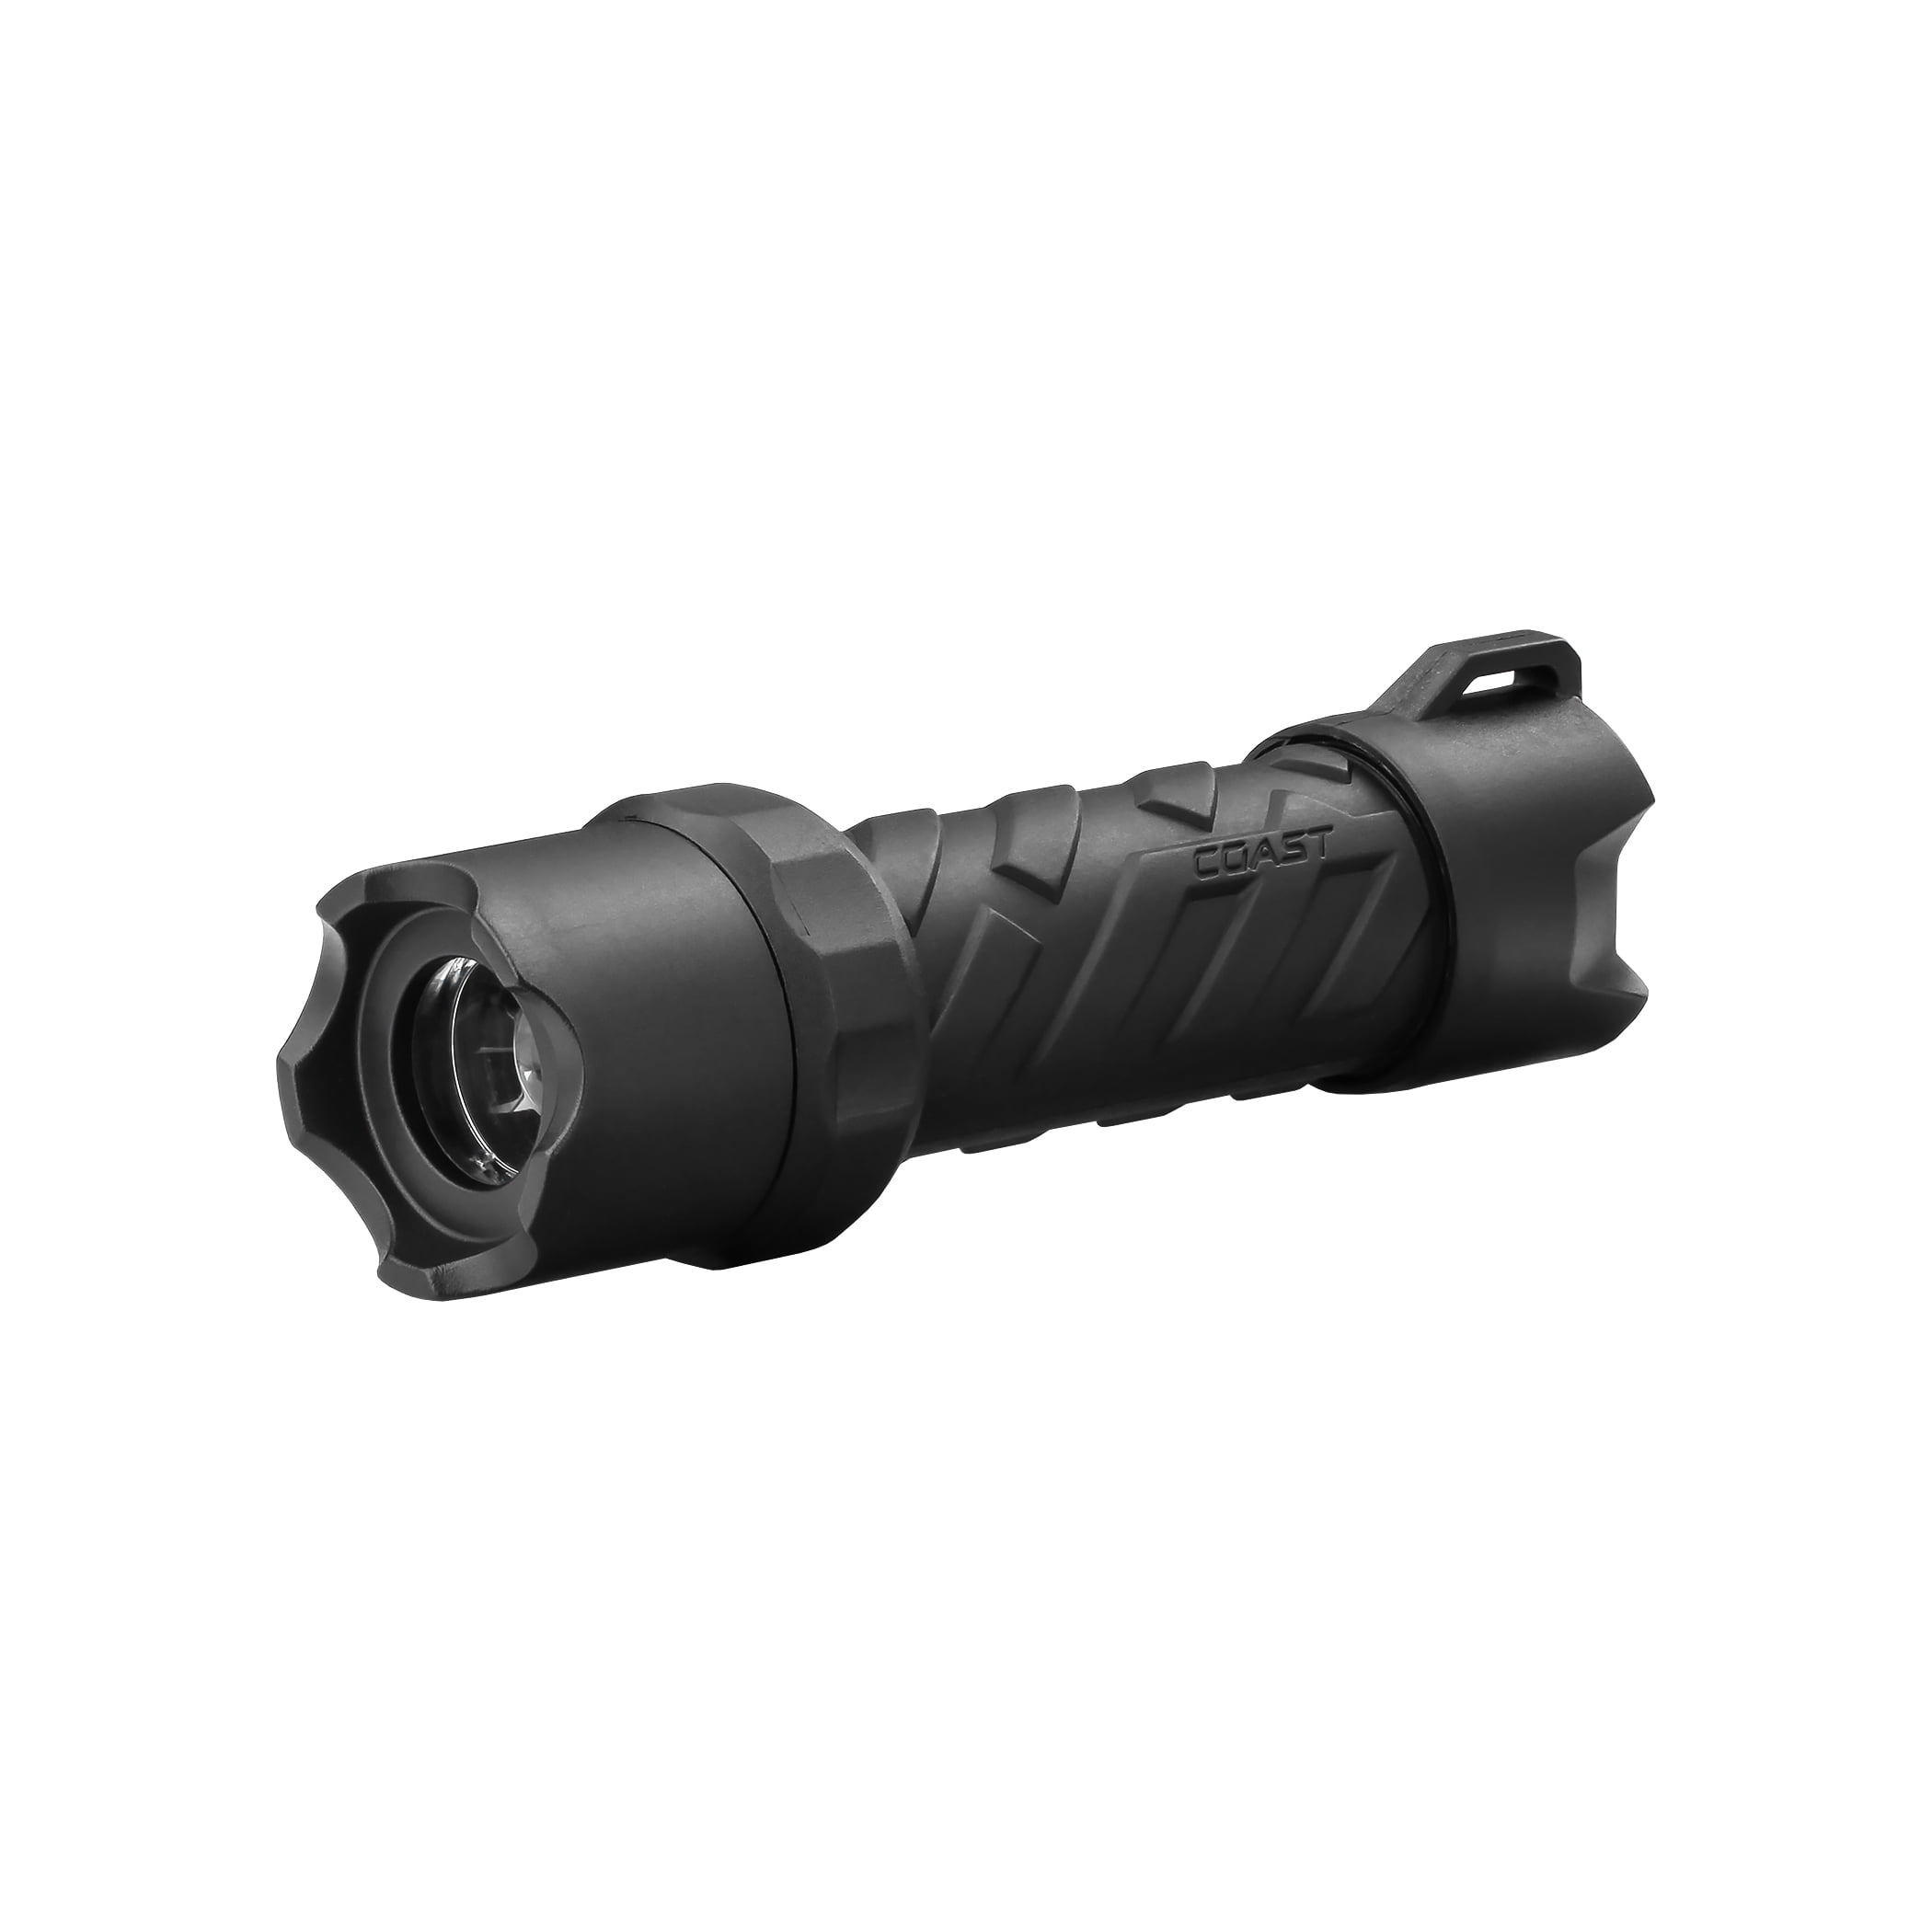 COAST Polysteel 250 Heavy-Duty 390 Lumen Stormproof LED Flashlight with Twist Focus, 3 x AAA Batteries Included